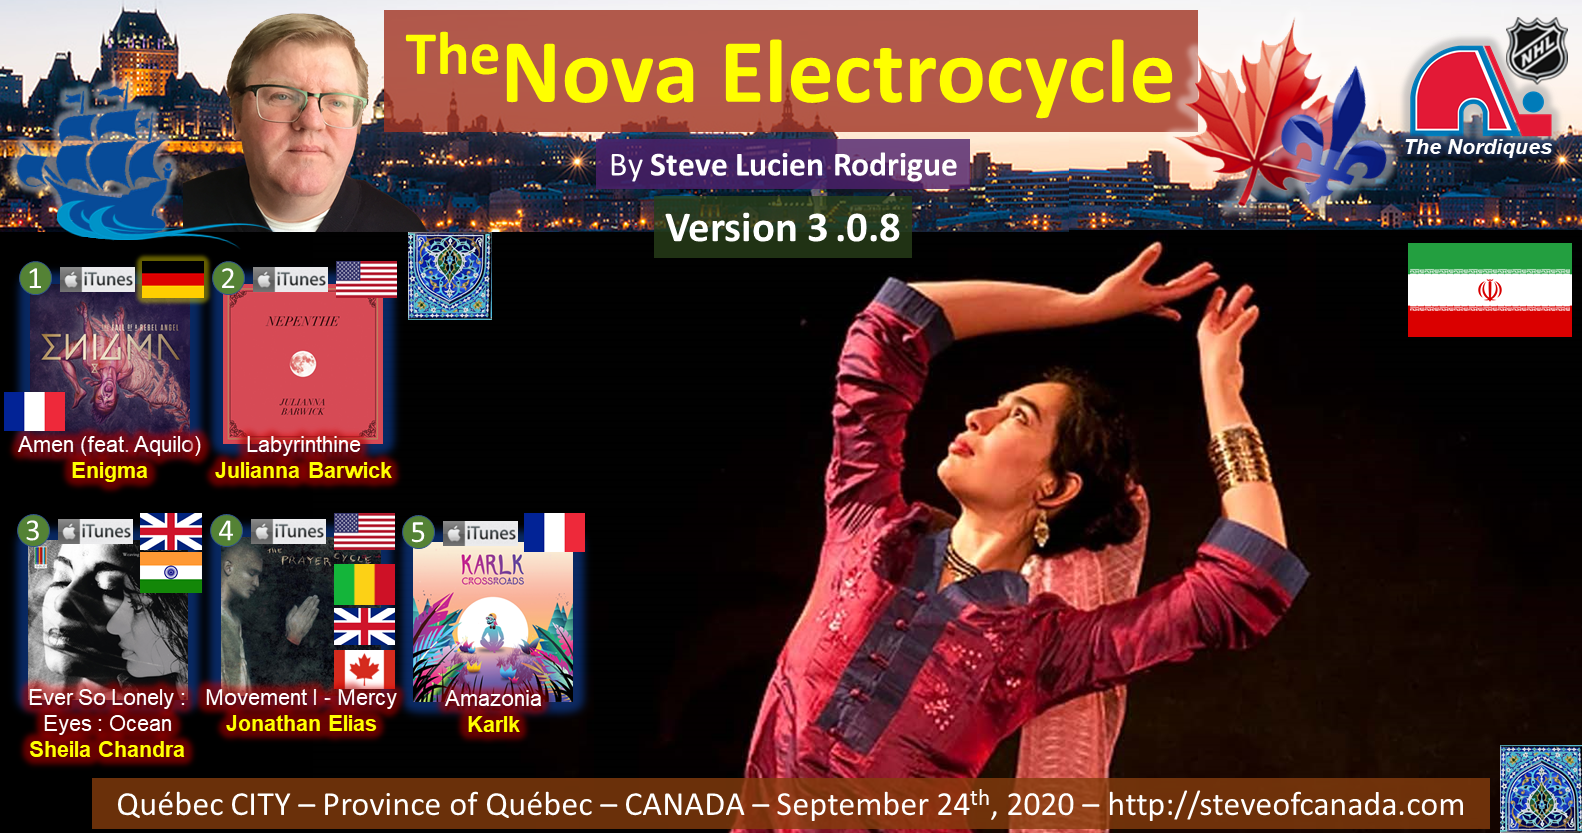 The Nova Electrocycle